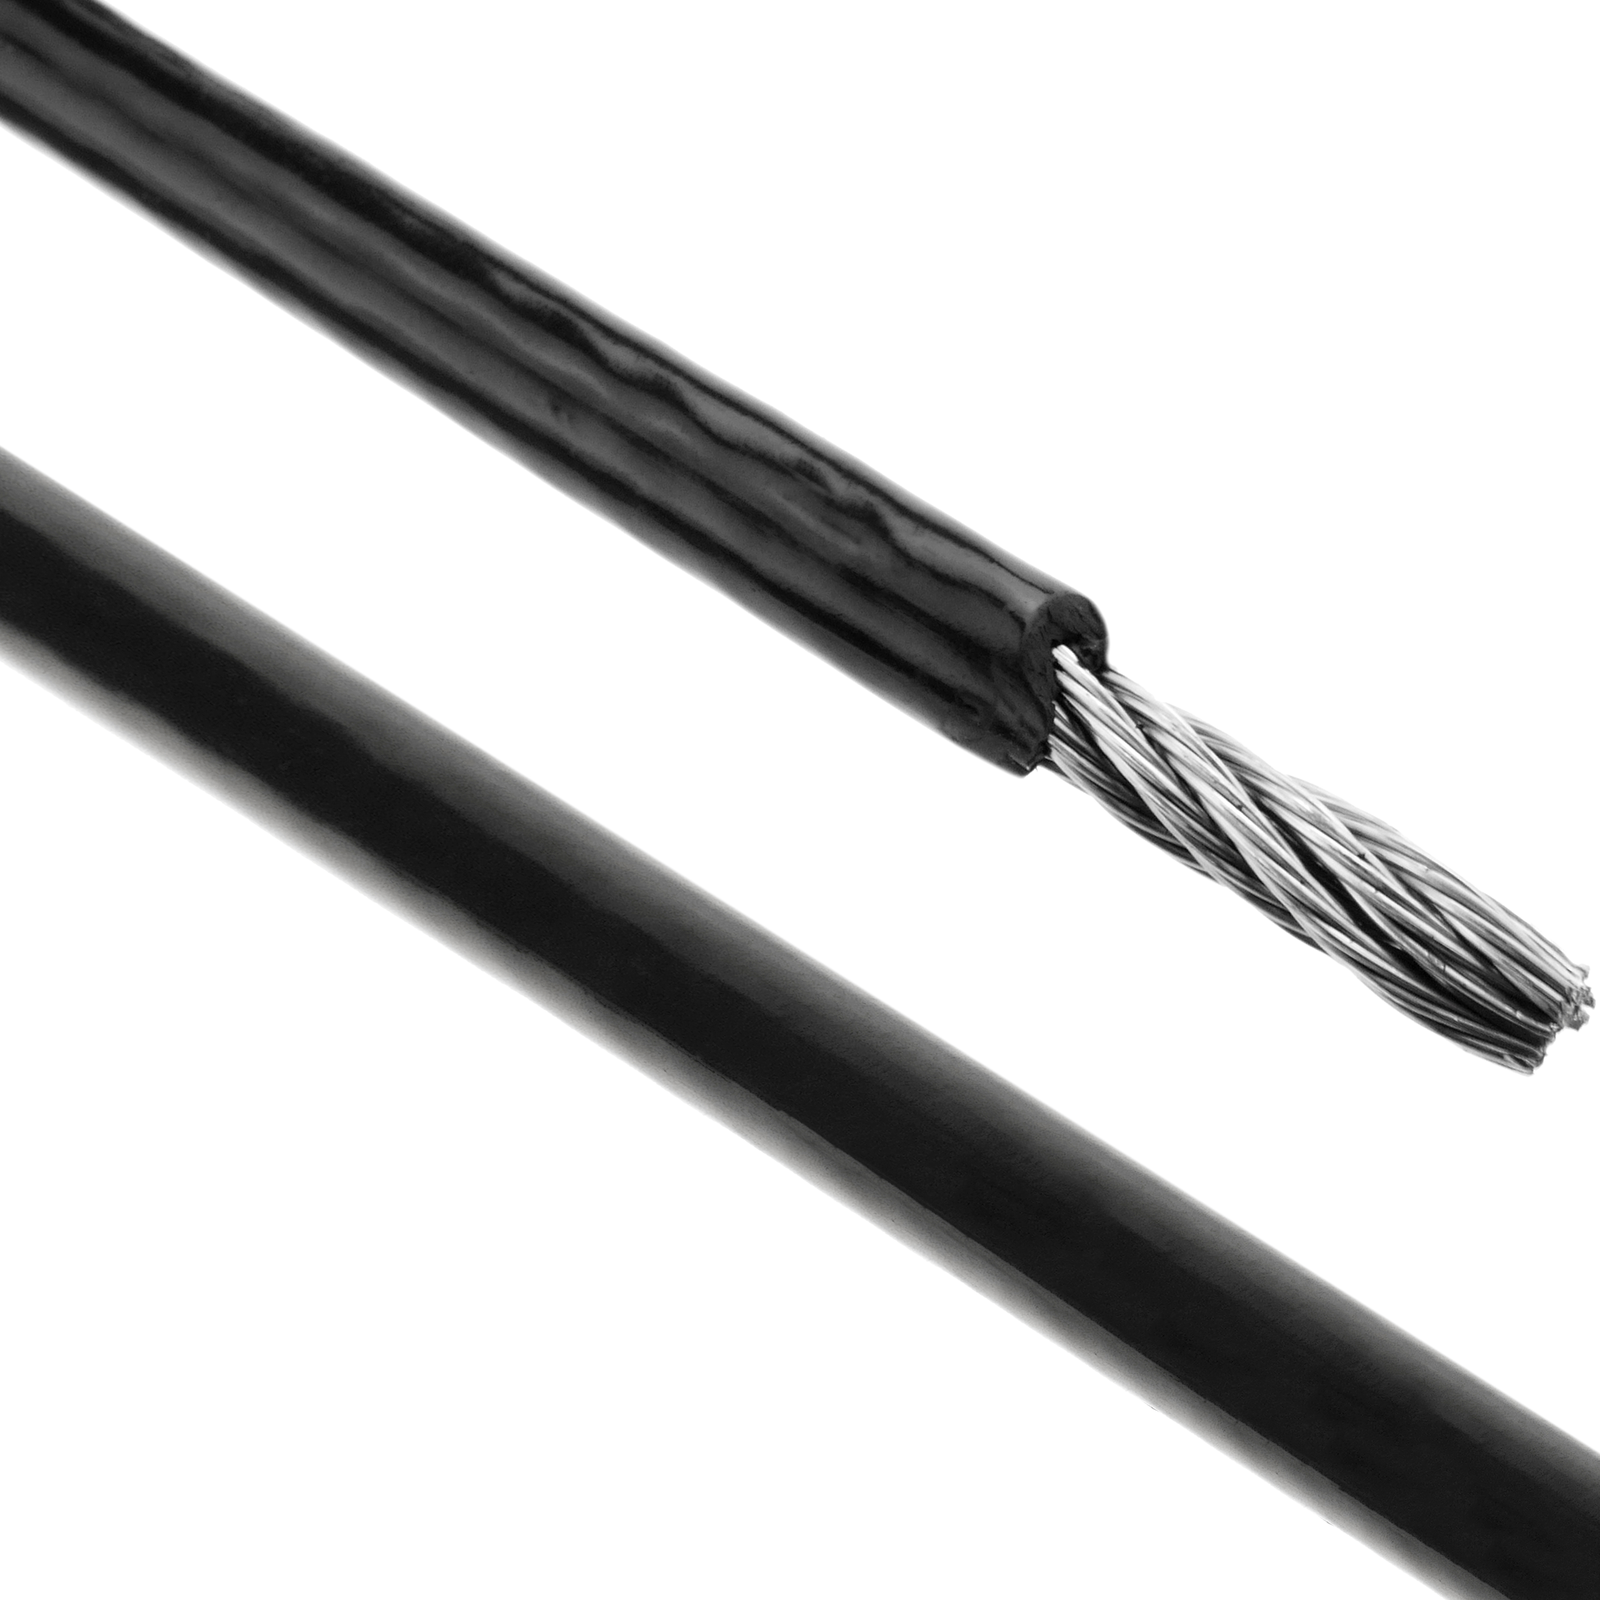 Cable de acero inoxidable 7x7 de 6 mm. Bobina de 100 m. Recubierto de PVC  negro - Cablematic